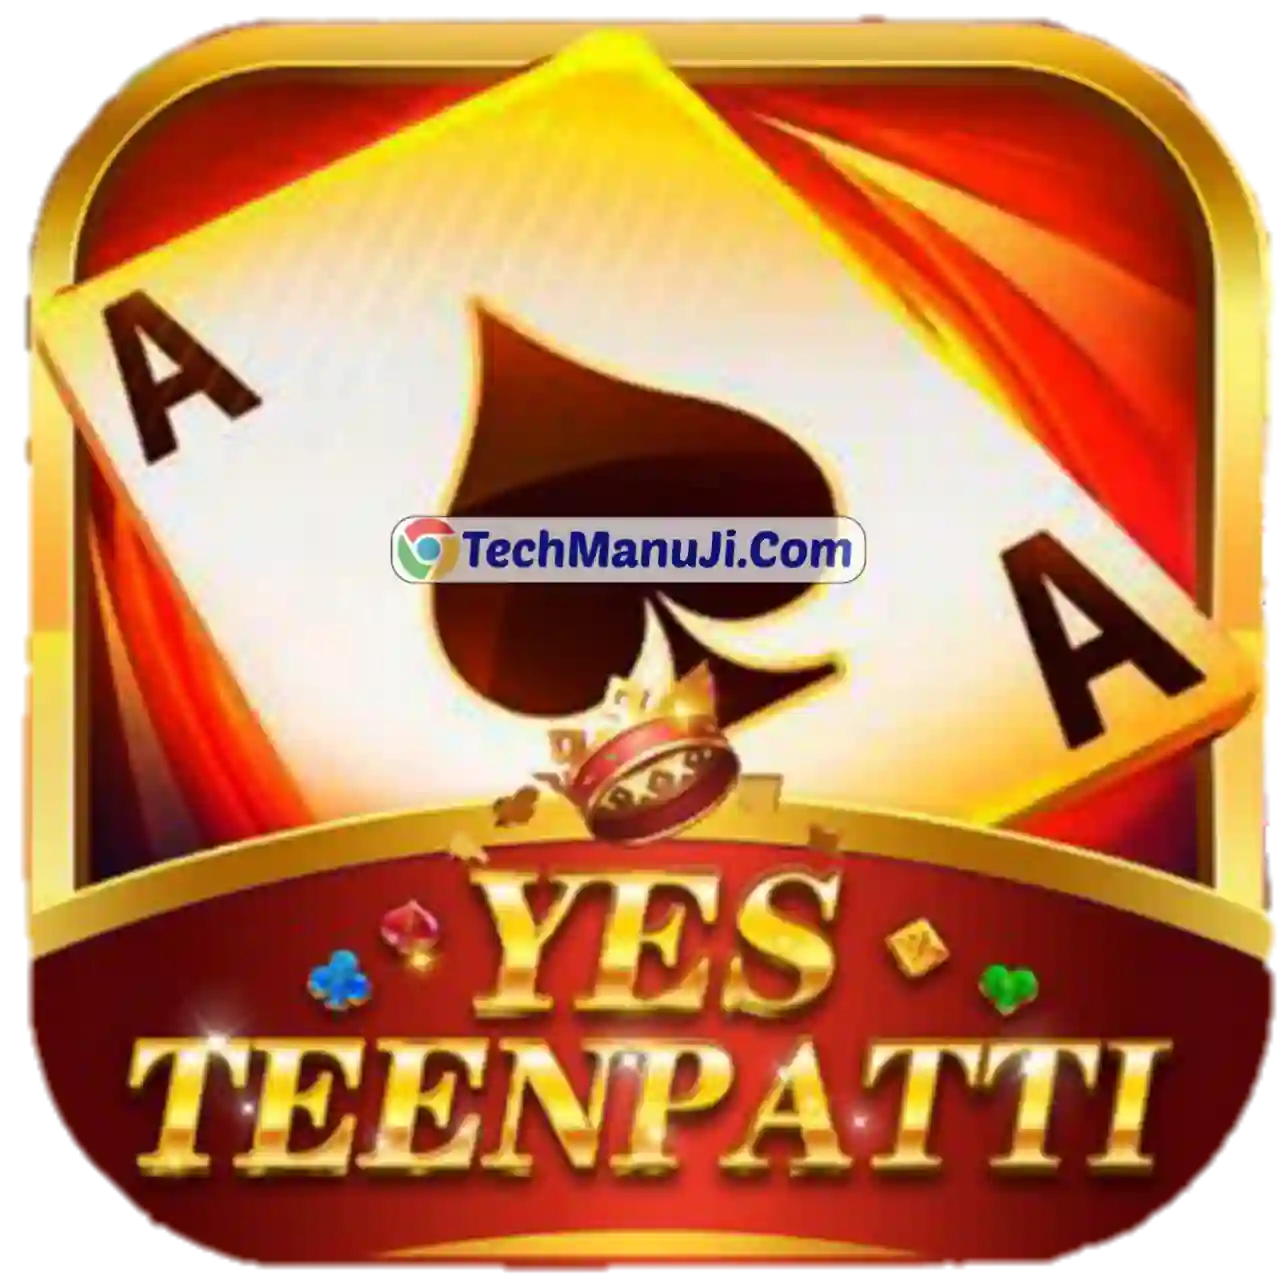 Teen Patti Yes Apk Download - Top 5 Teen Patti App List